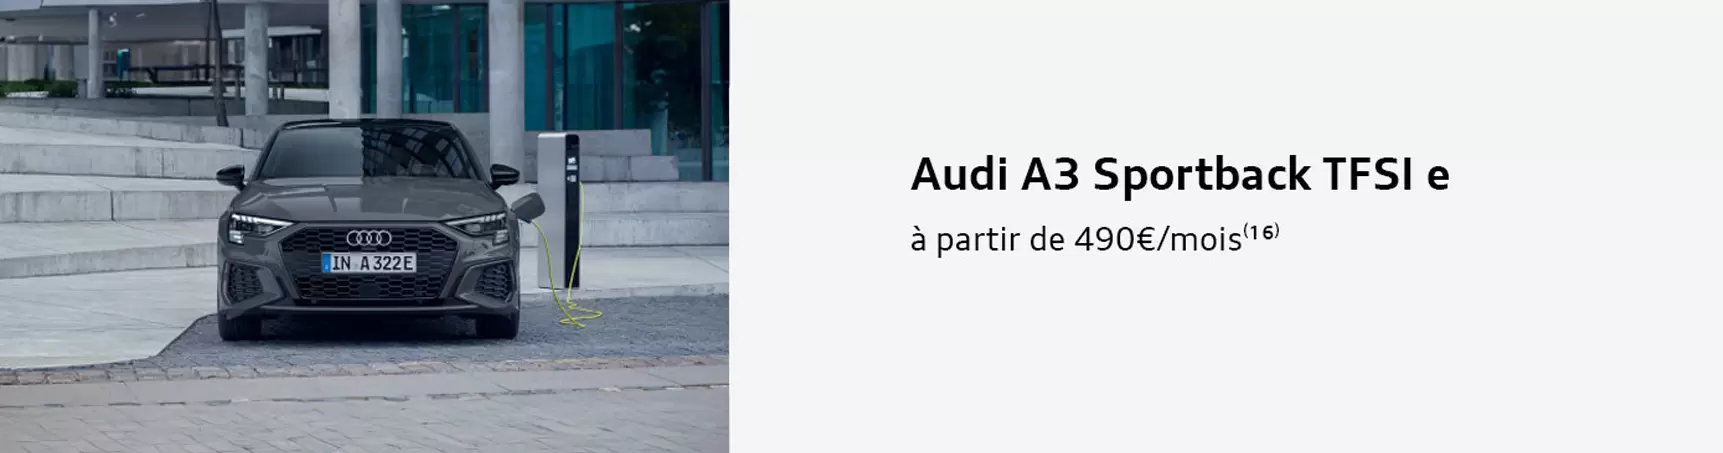 Audi a3 sportback tfsi